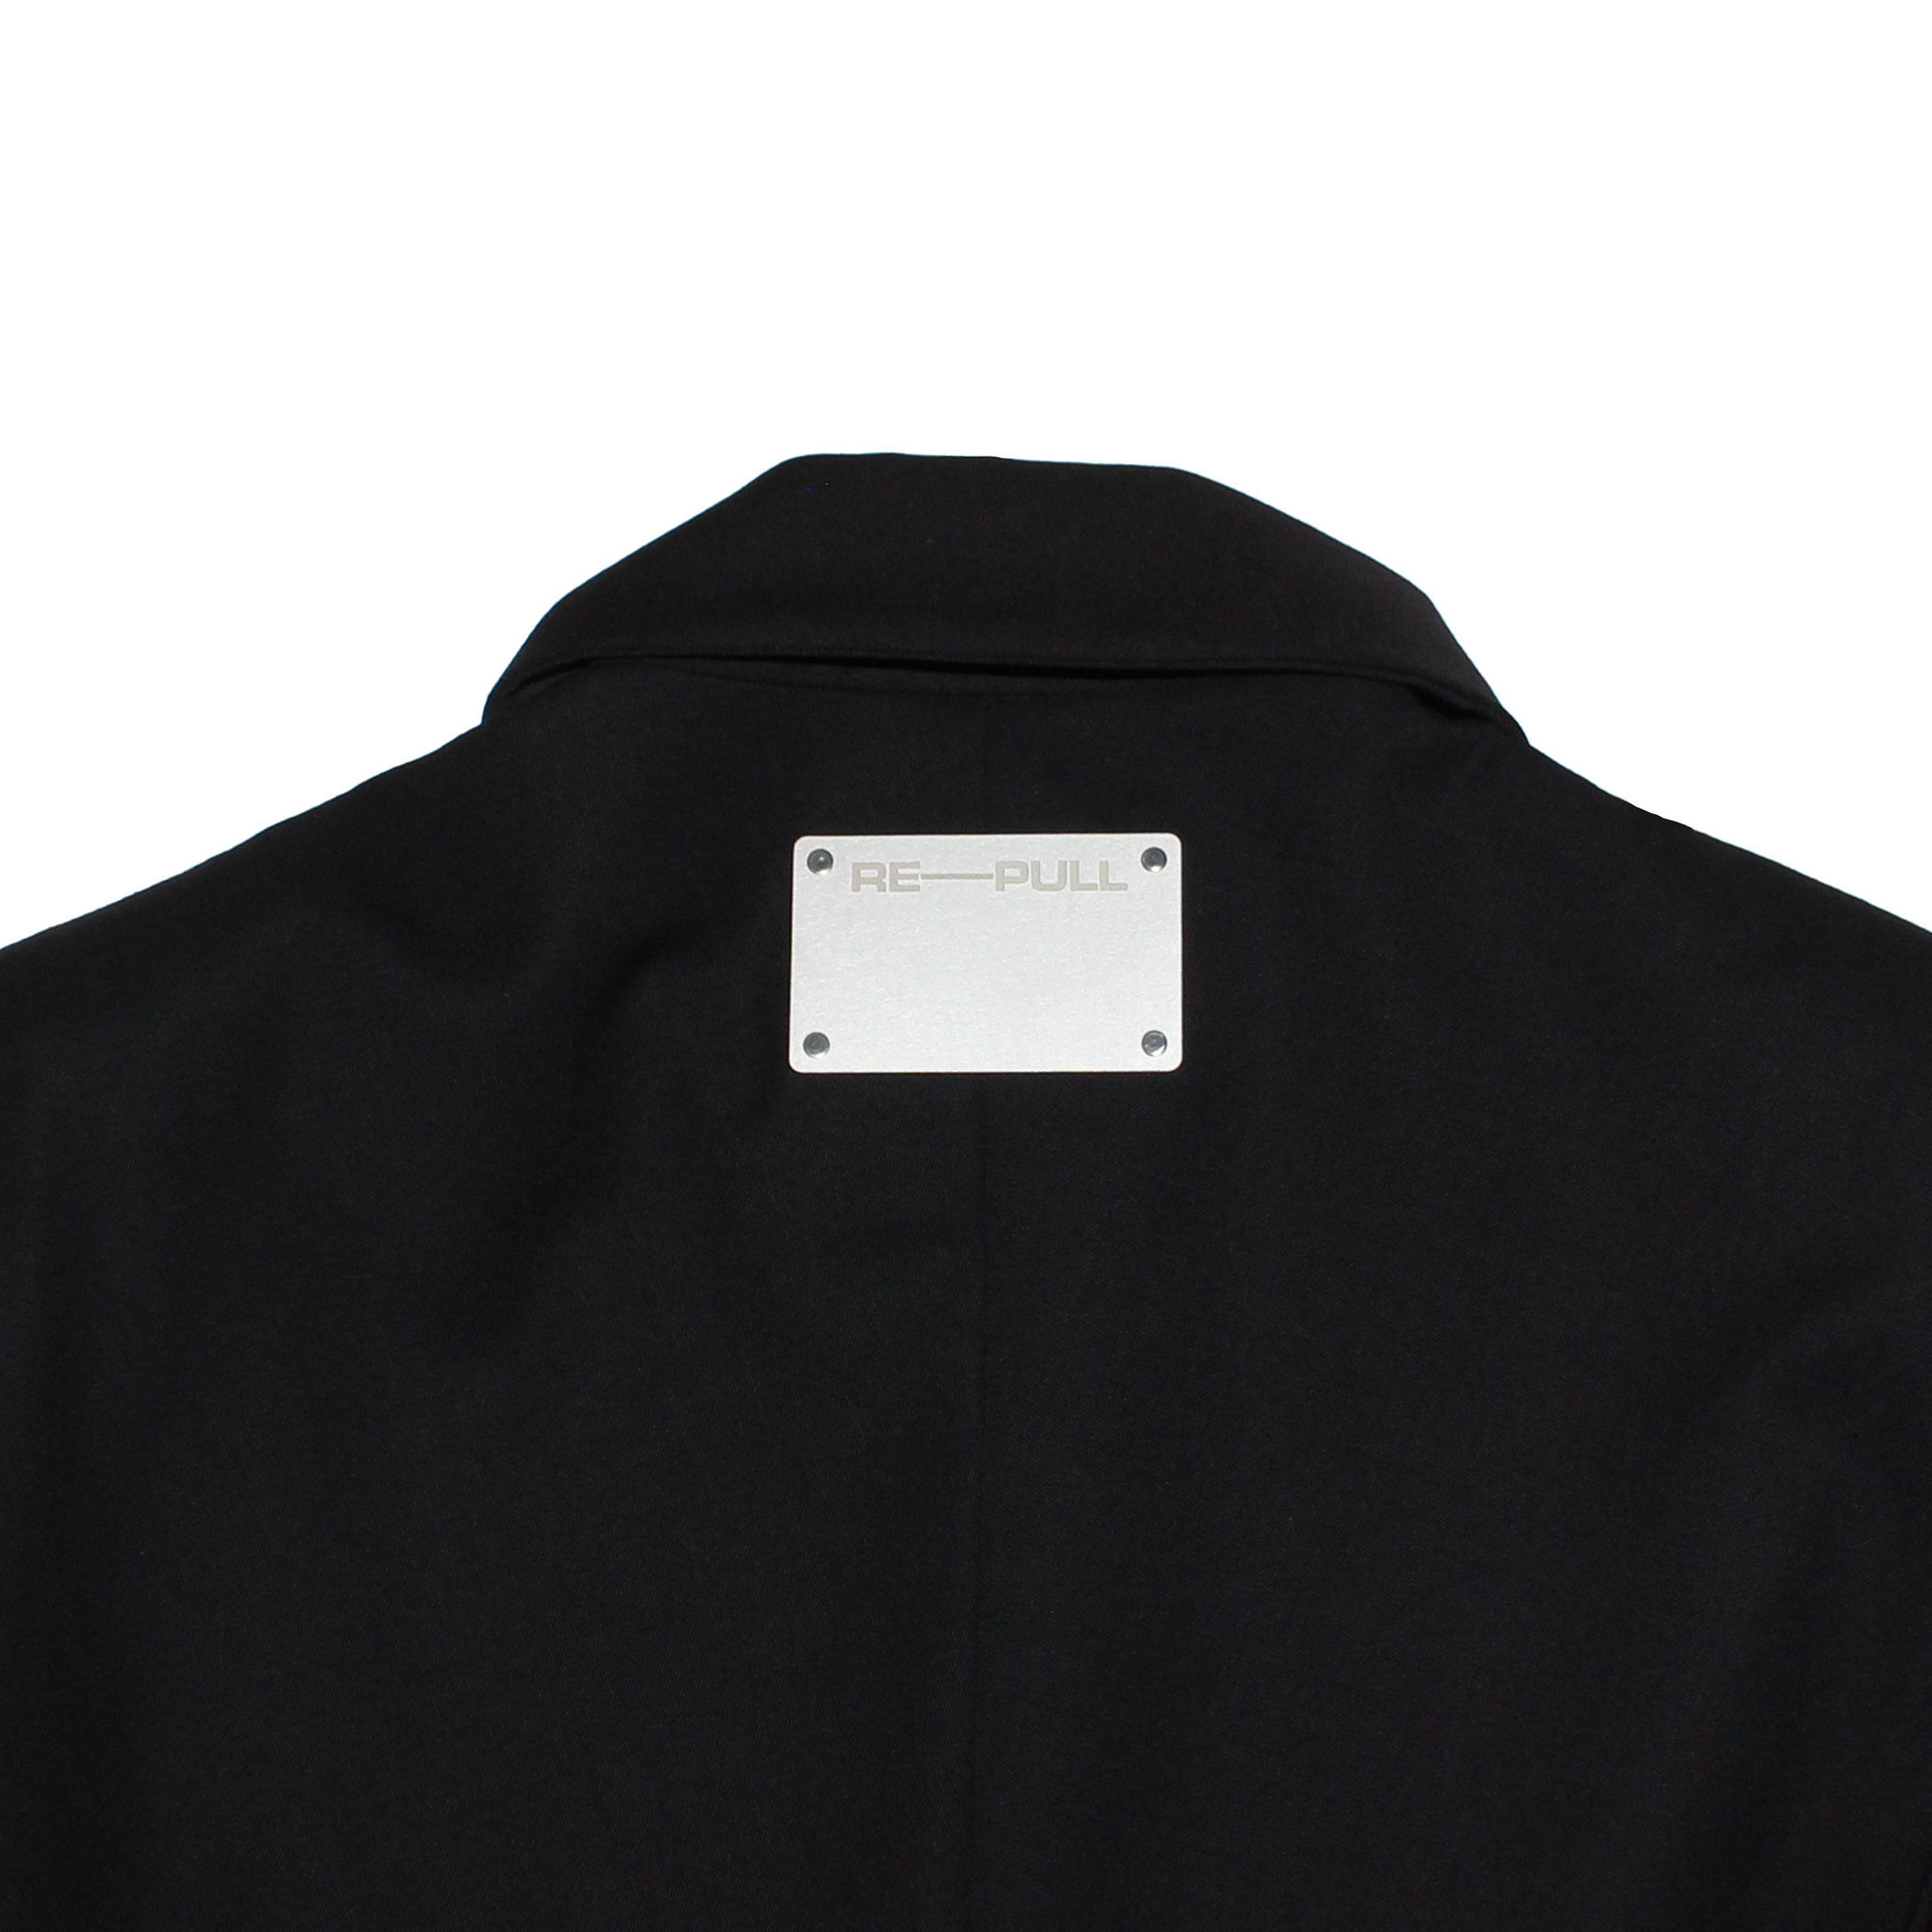 Black Vanta Modular Blazer - Size 1